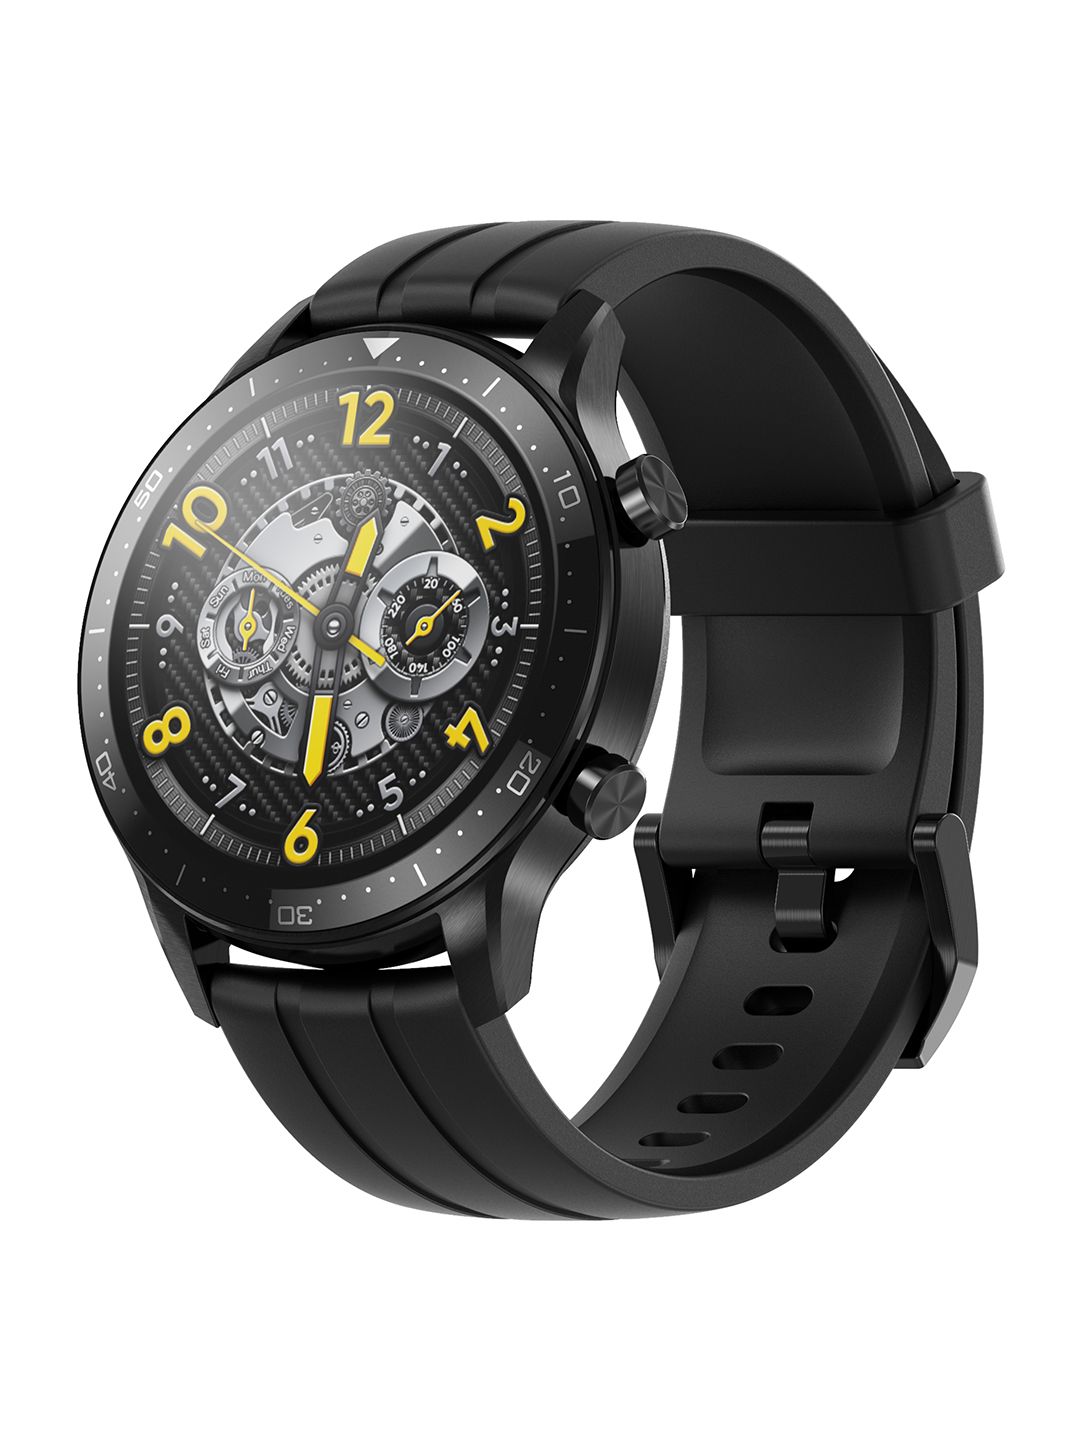 Realme Unisex Black S Pro Smart Watch Price in India